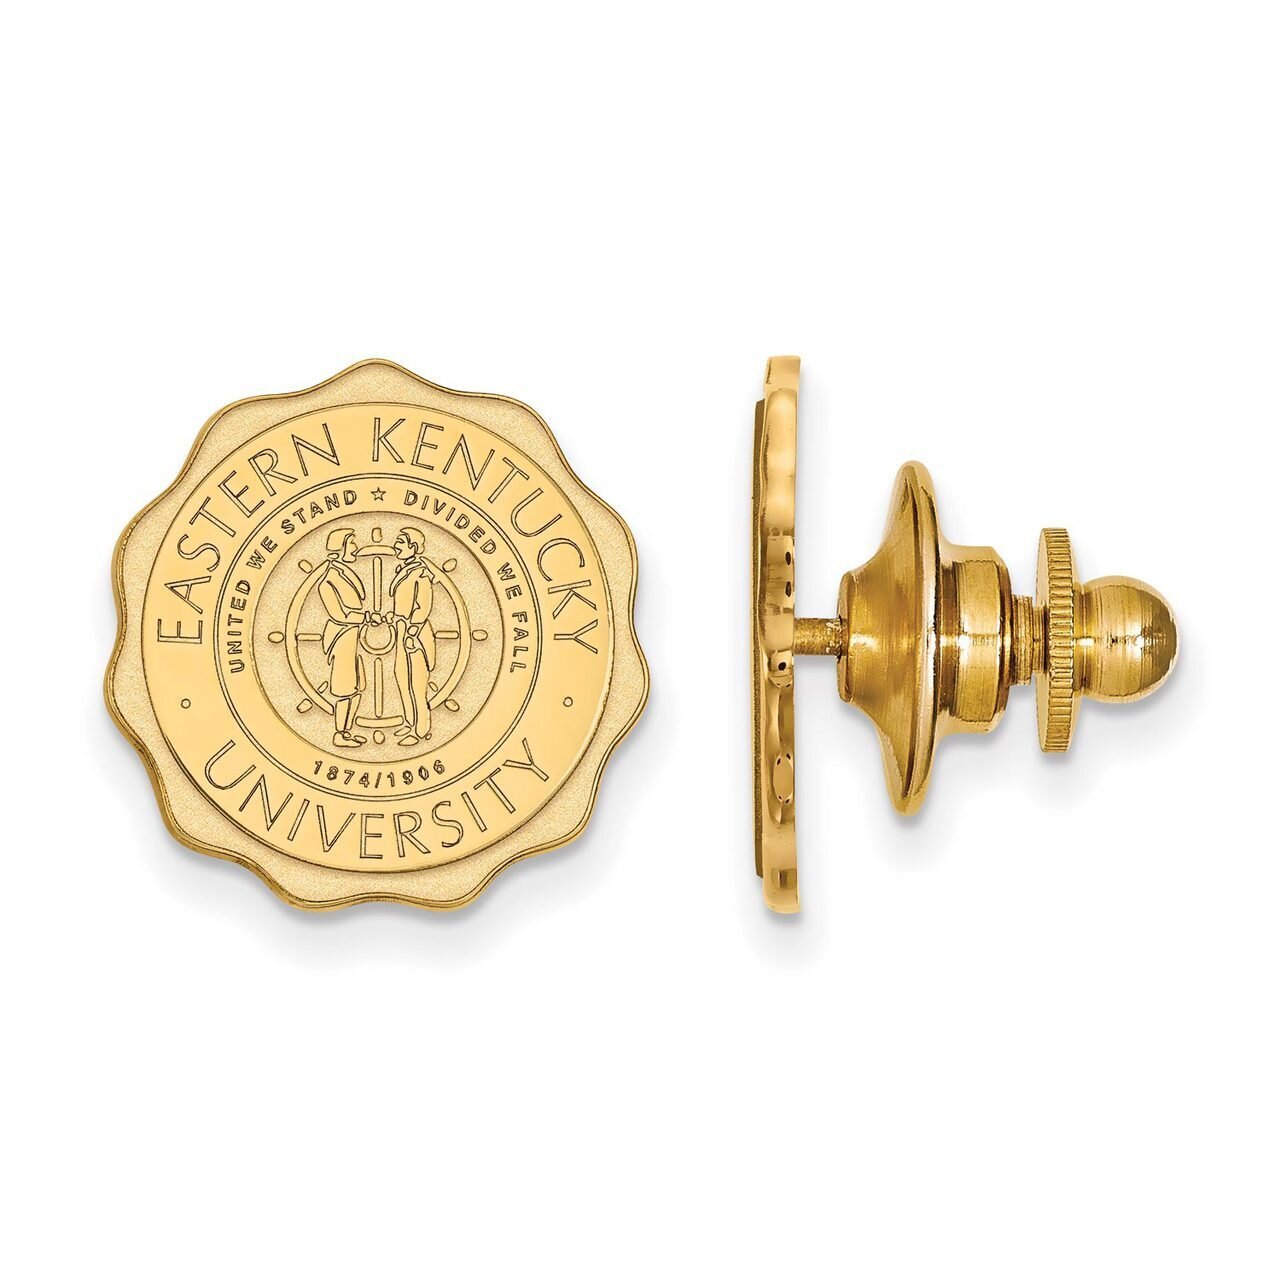 Eastern Kentucky University Crest Lapel Pin Gold-plated Silver GP017EKU